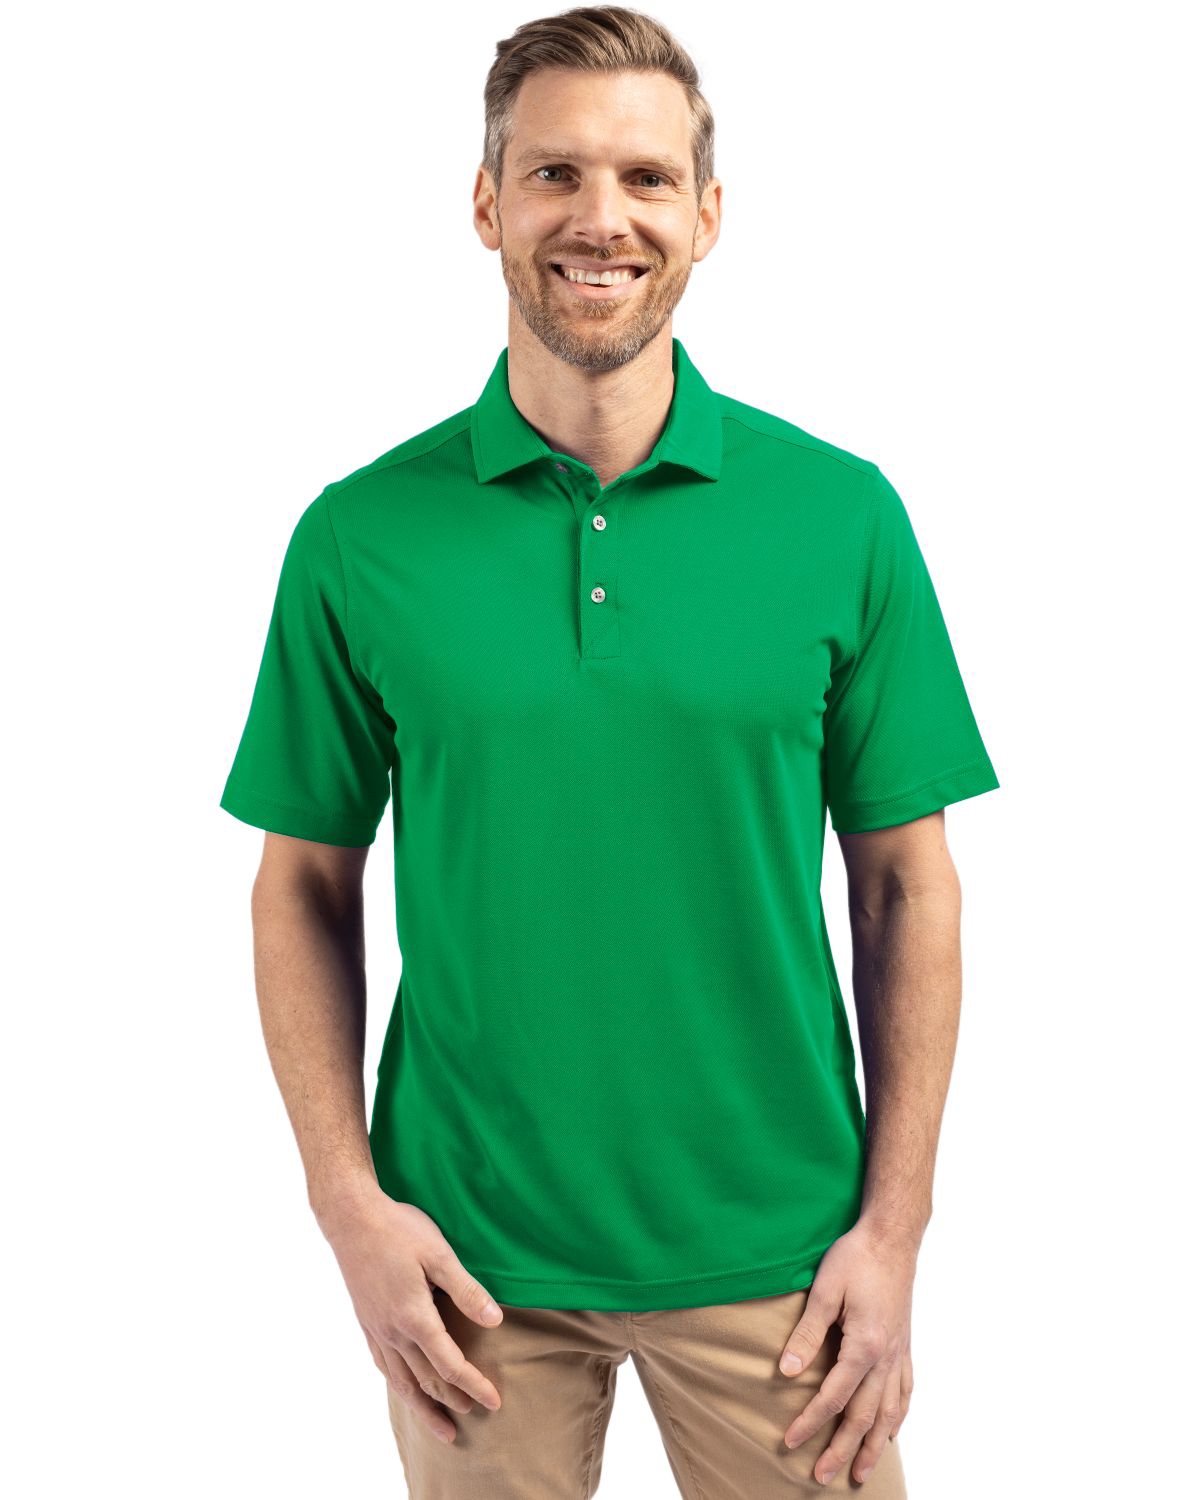 Virtue Eco Pique Recycled Men's Polo Shirt - Kelly green